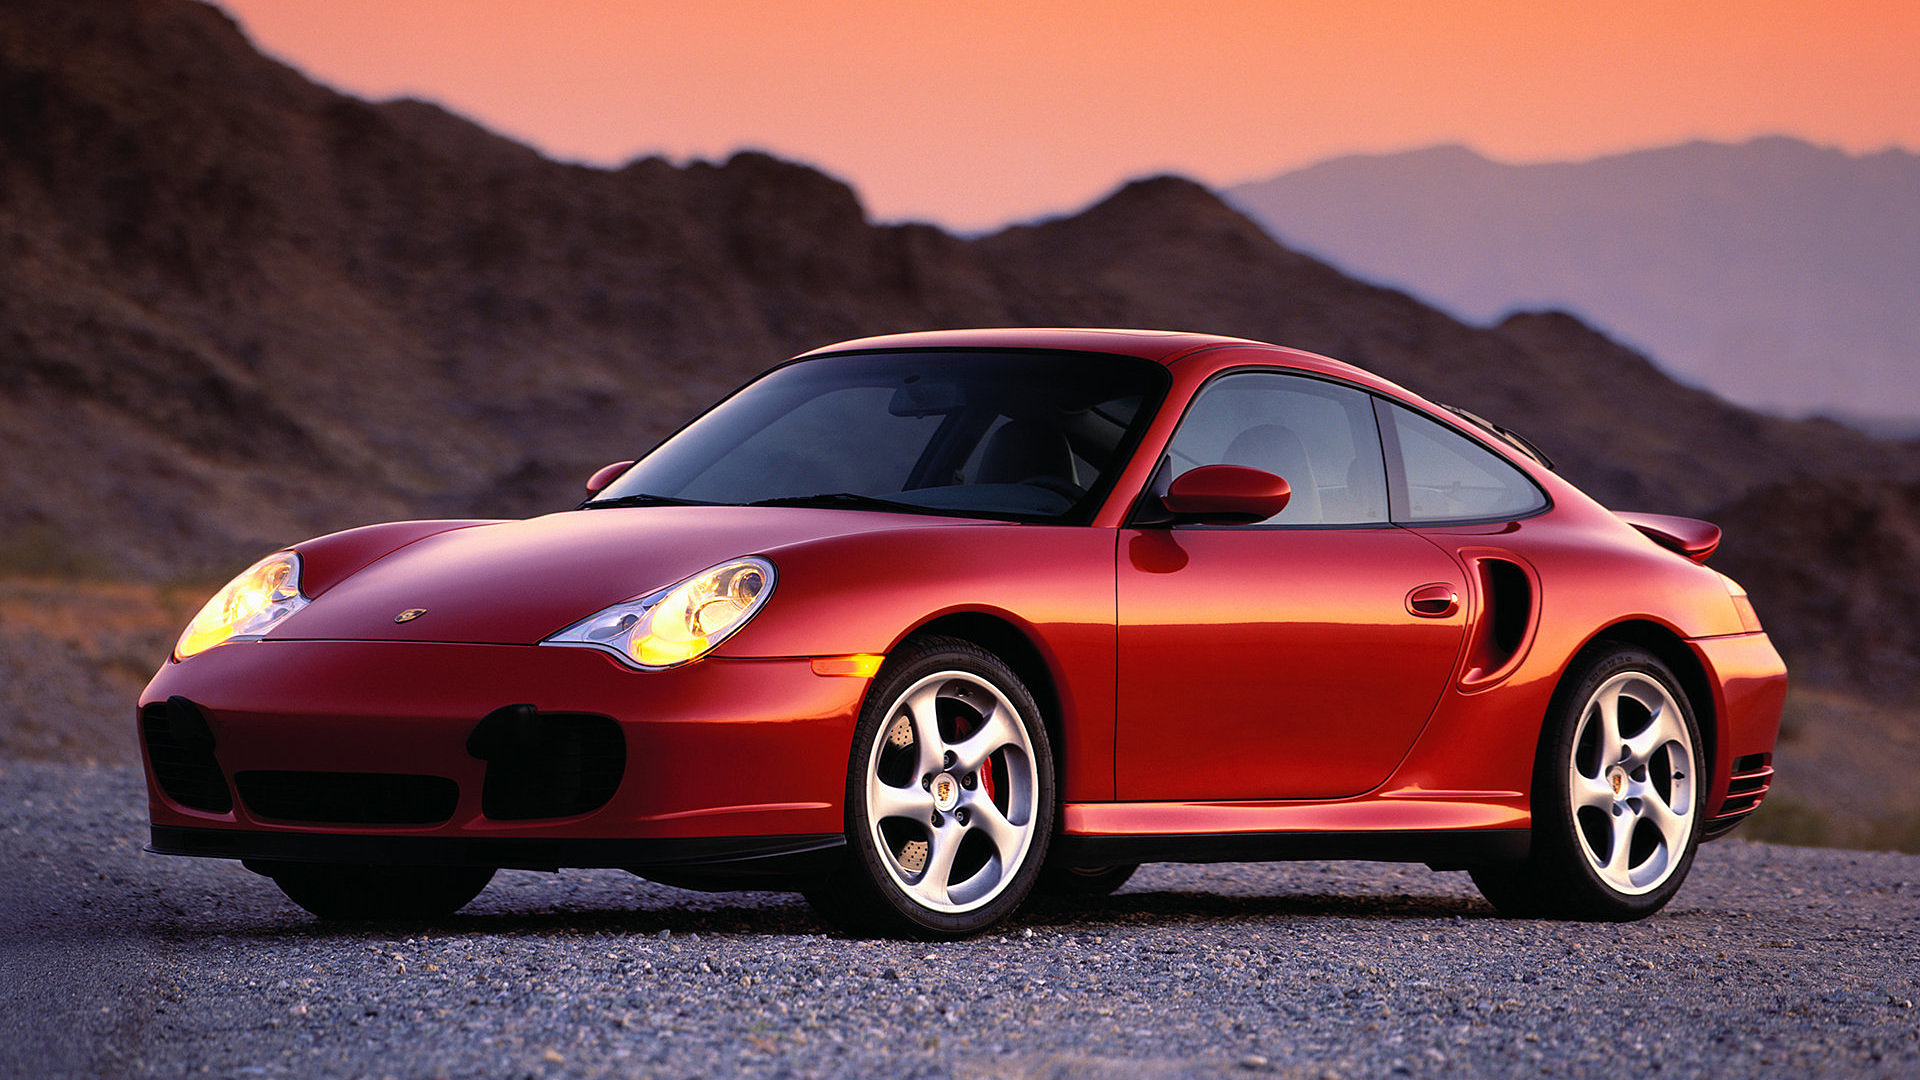  2002 Porsche 911 Turbo Wallpaper.